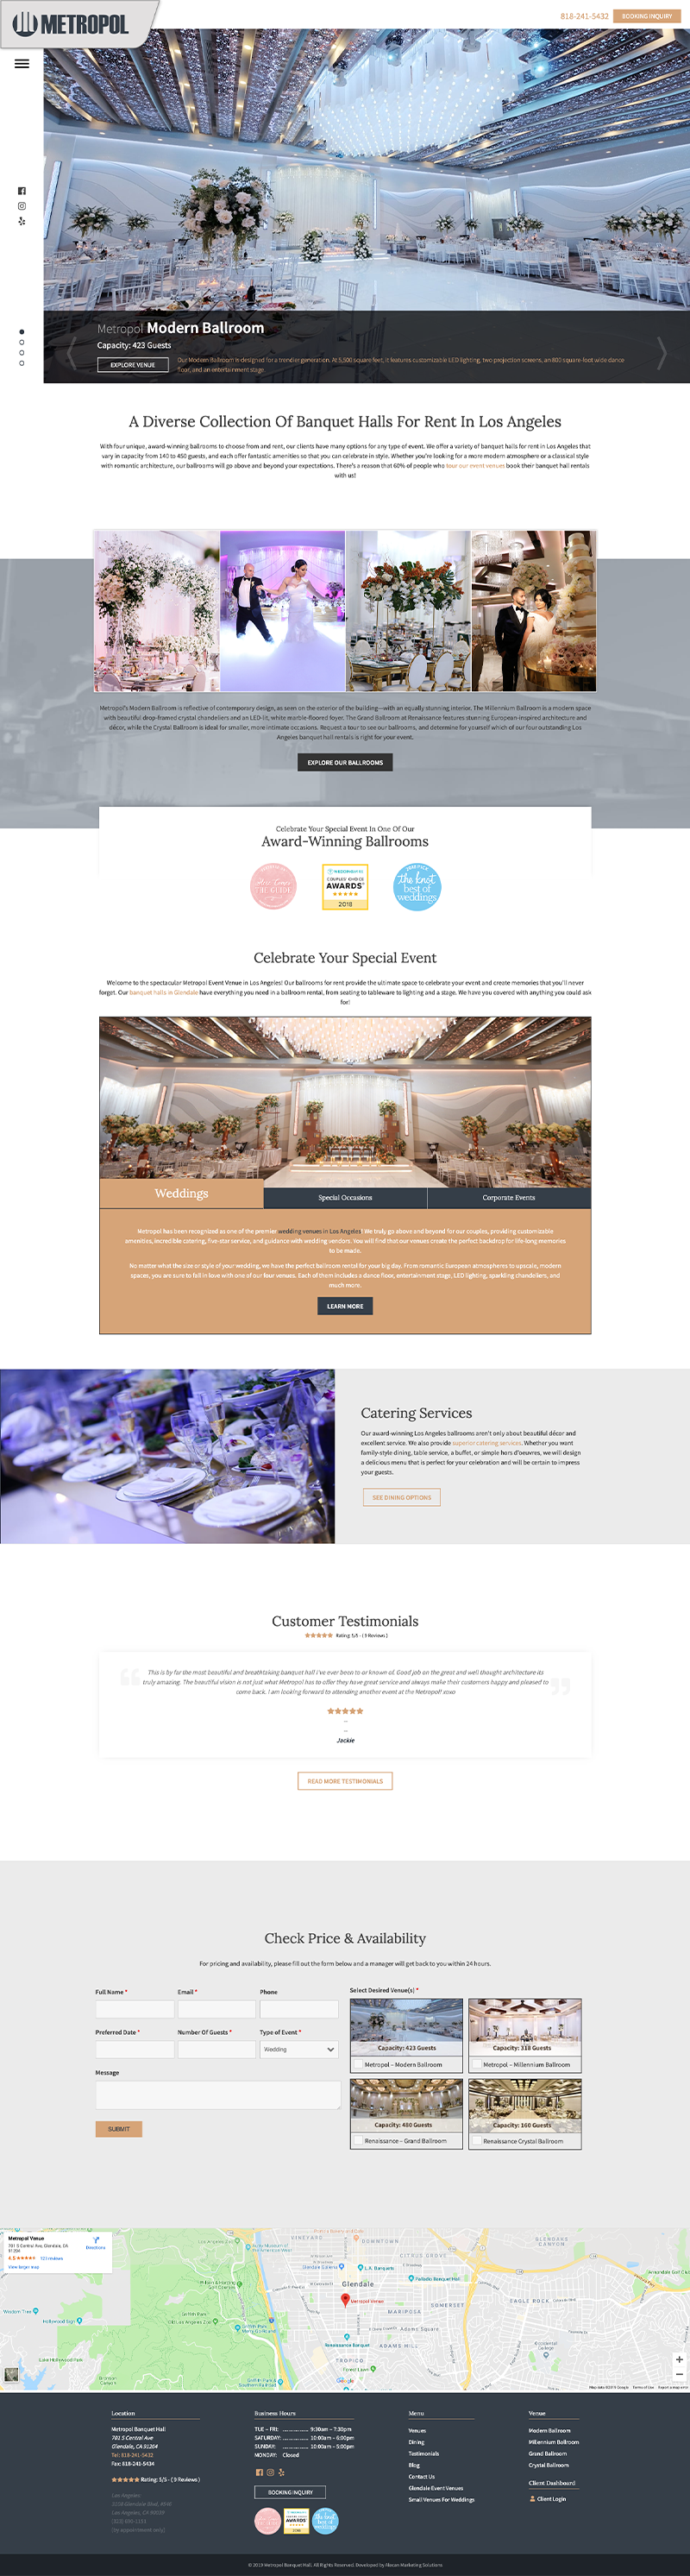 Metropol Banquet Hall - Website